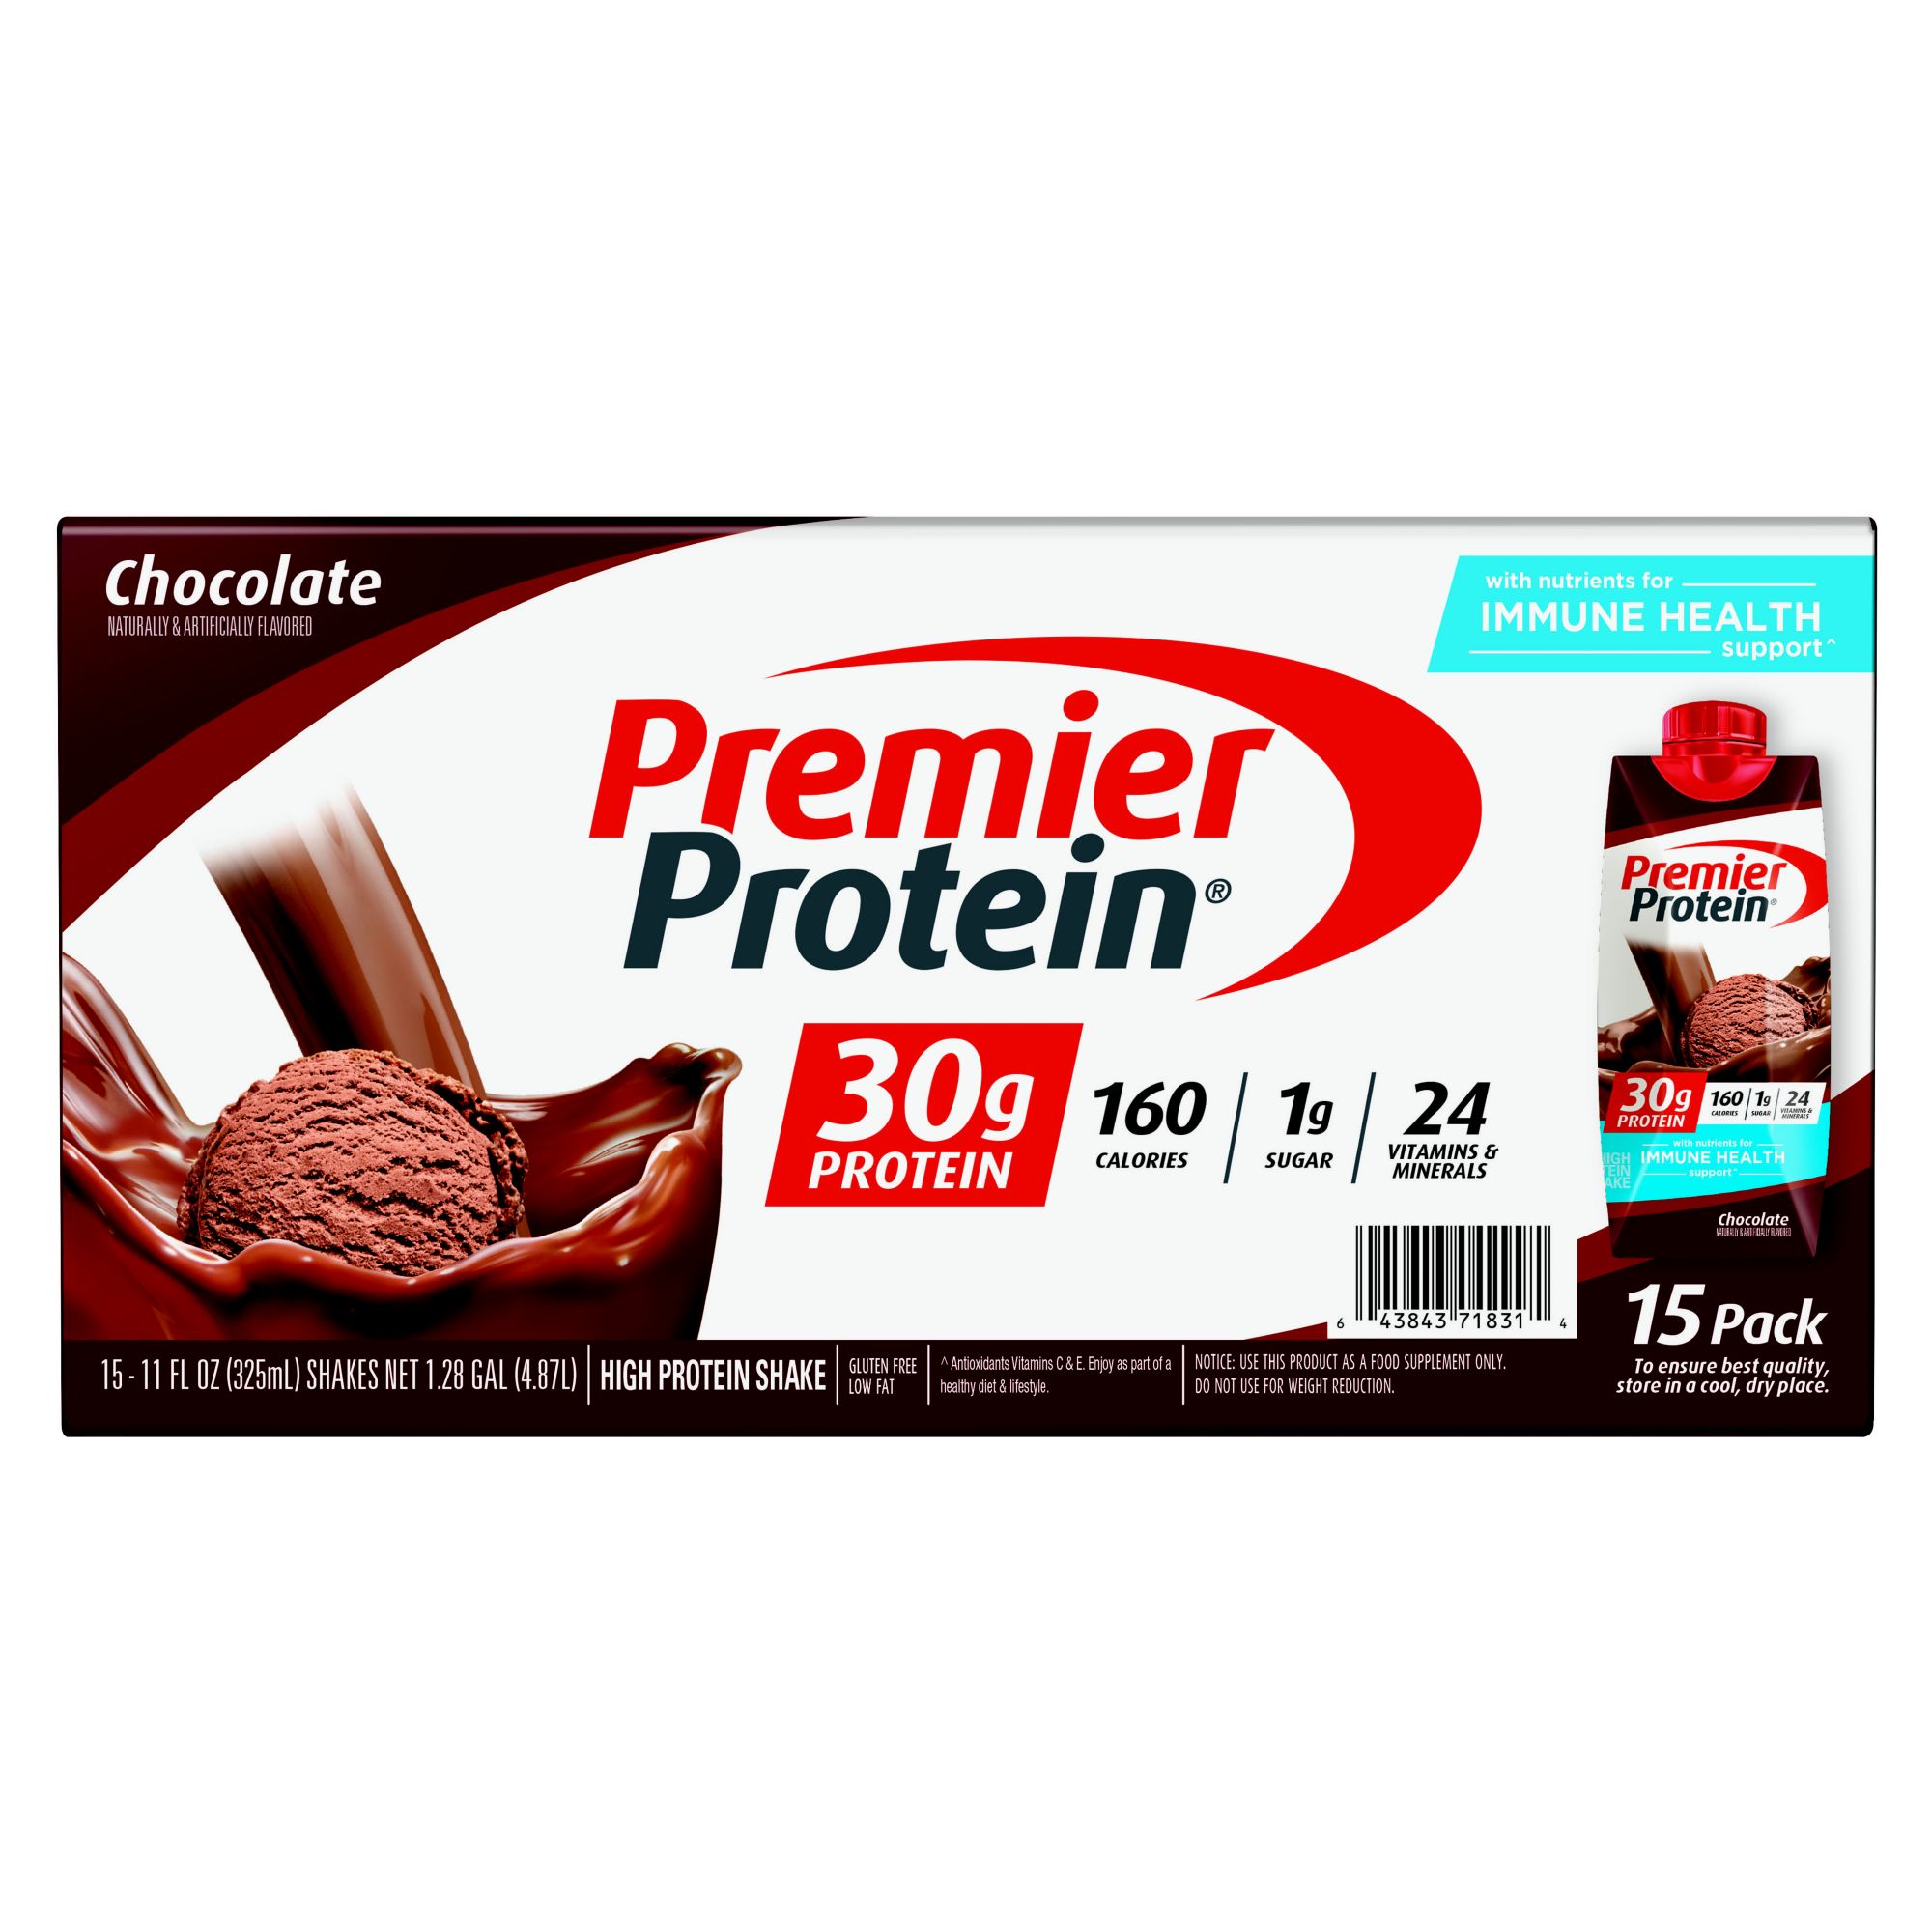 Premier Protein Chocolate Ready to Drink Shake, 15 ct./11 oz.